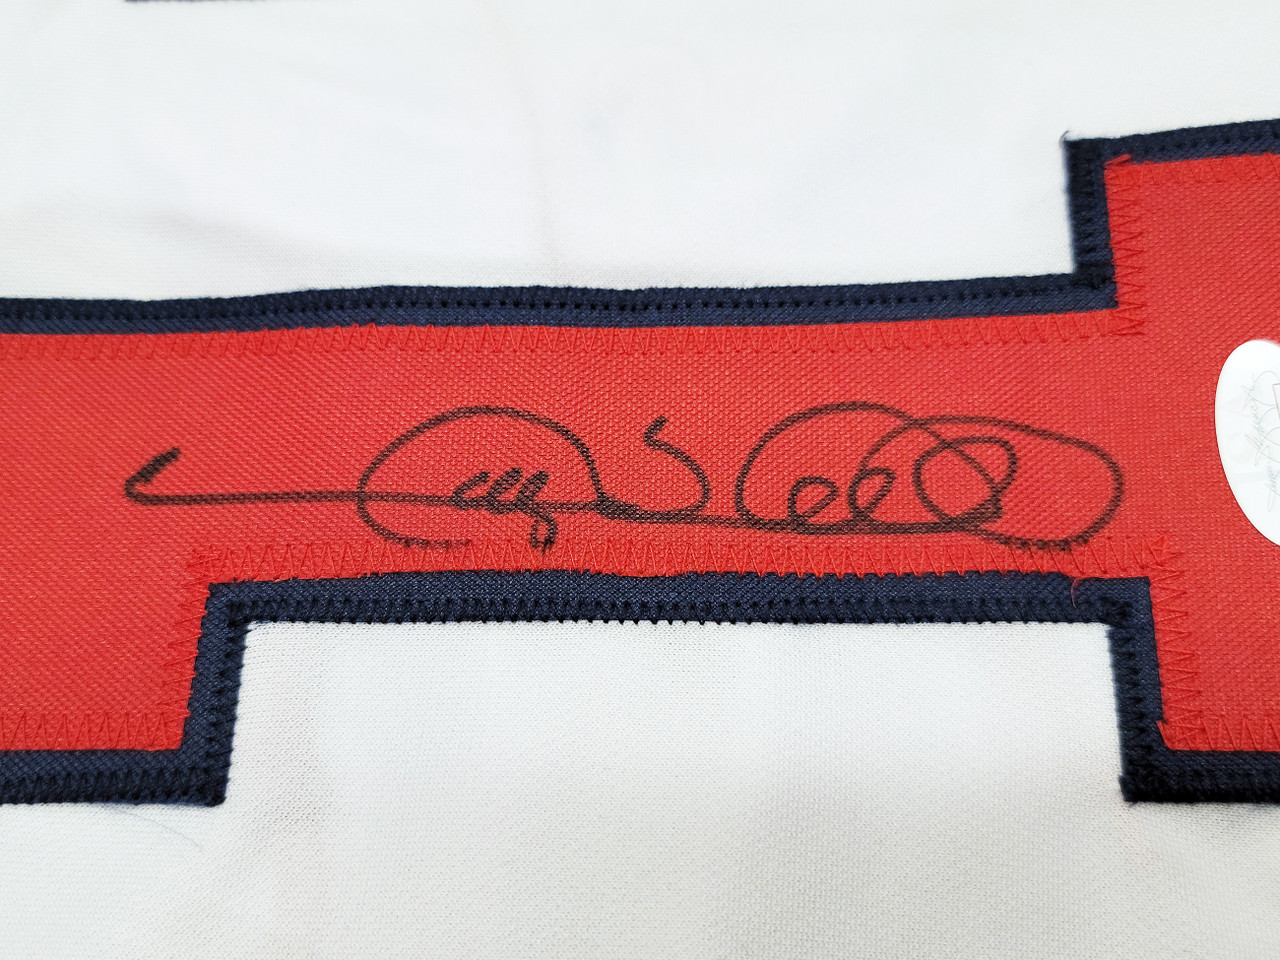 Gary Sheffield Signed Autographed White Jersey JSA Authentication